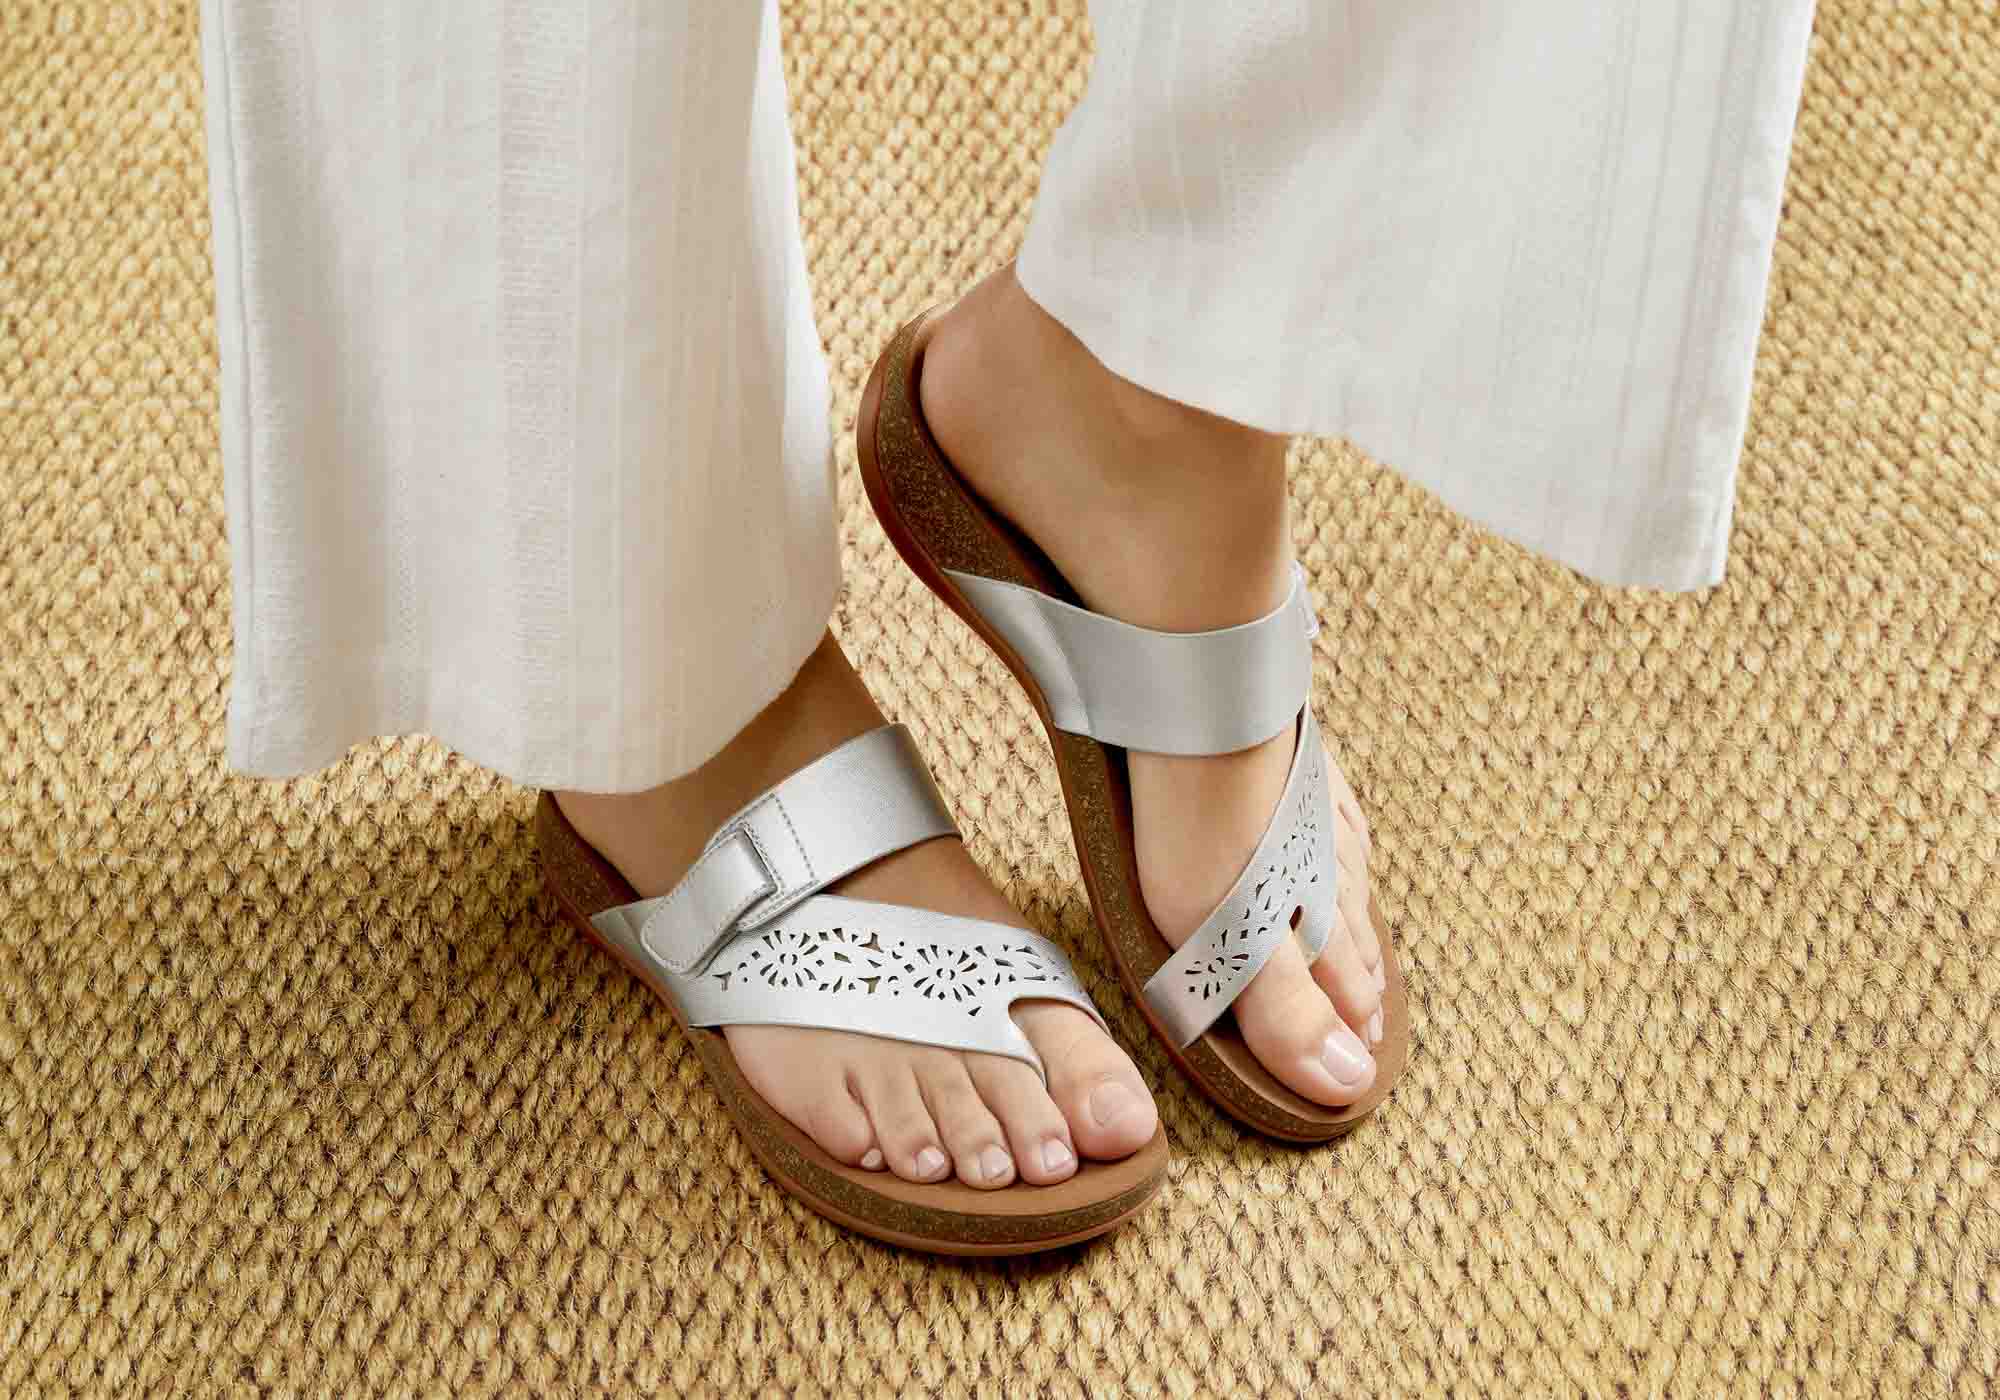 Scholl Orthaheel Antigo Womens Comfortable Supportive Thongs Sandals